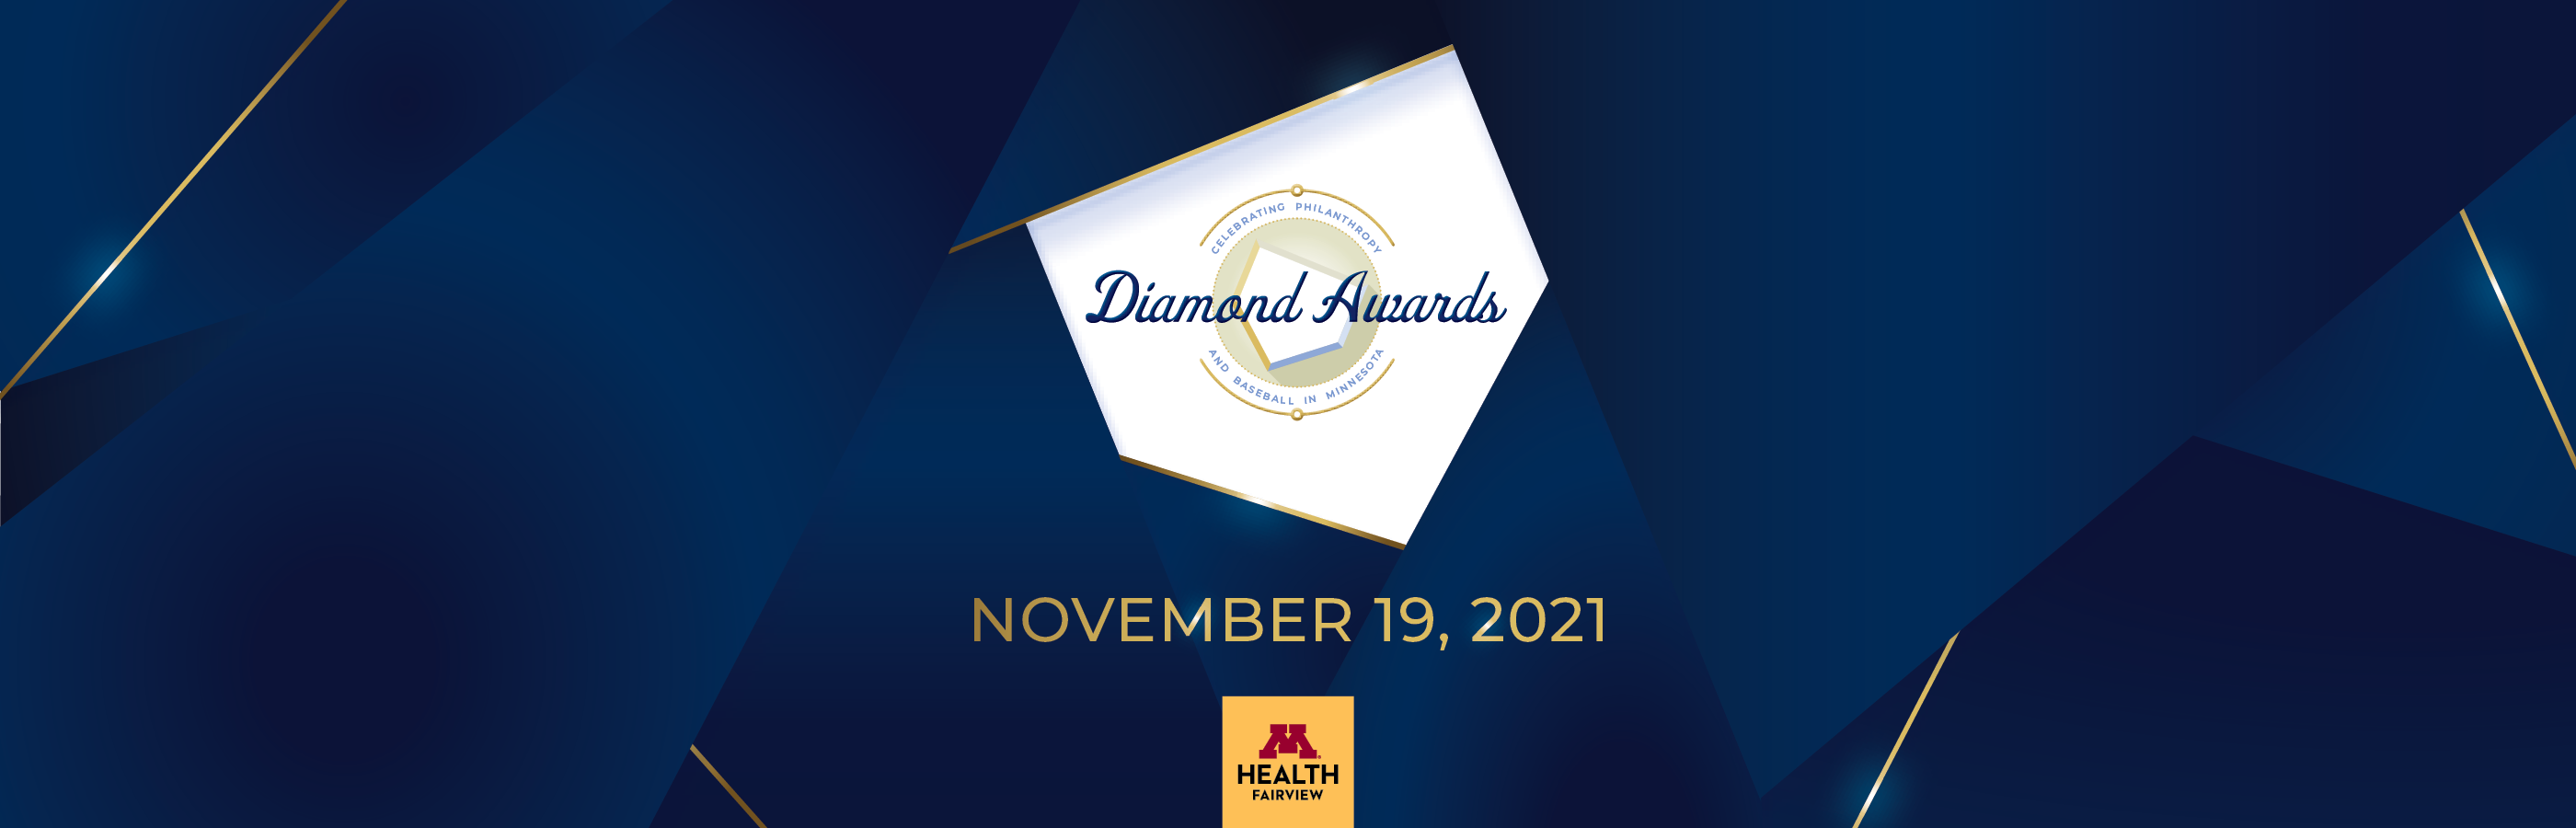 Diamond Awards Banner - Nov 19th